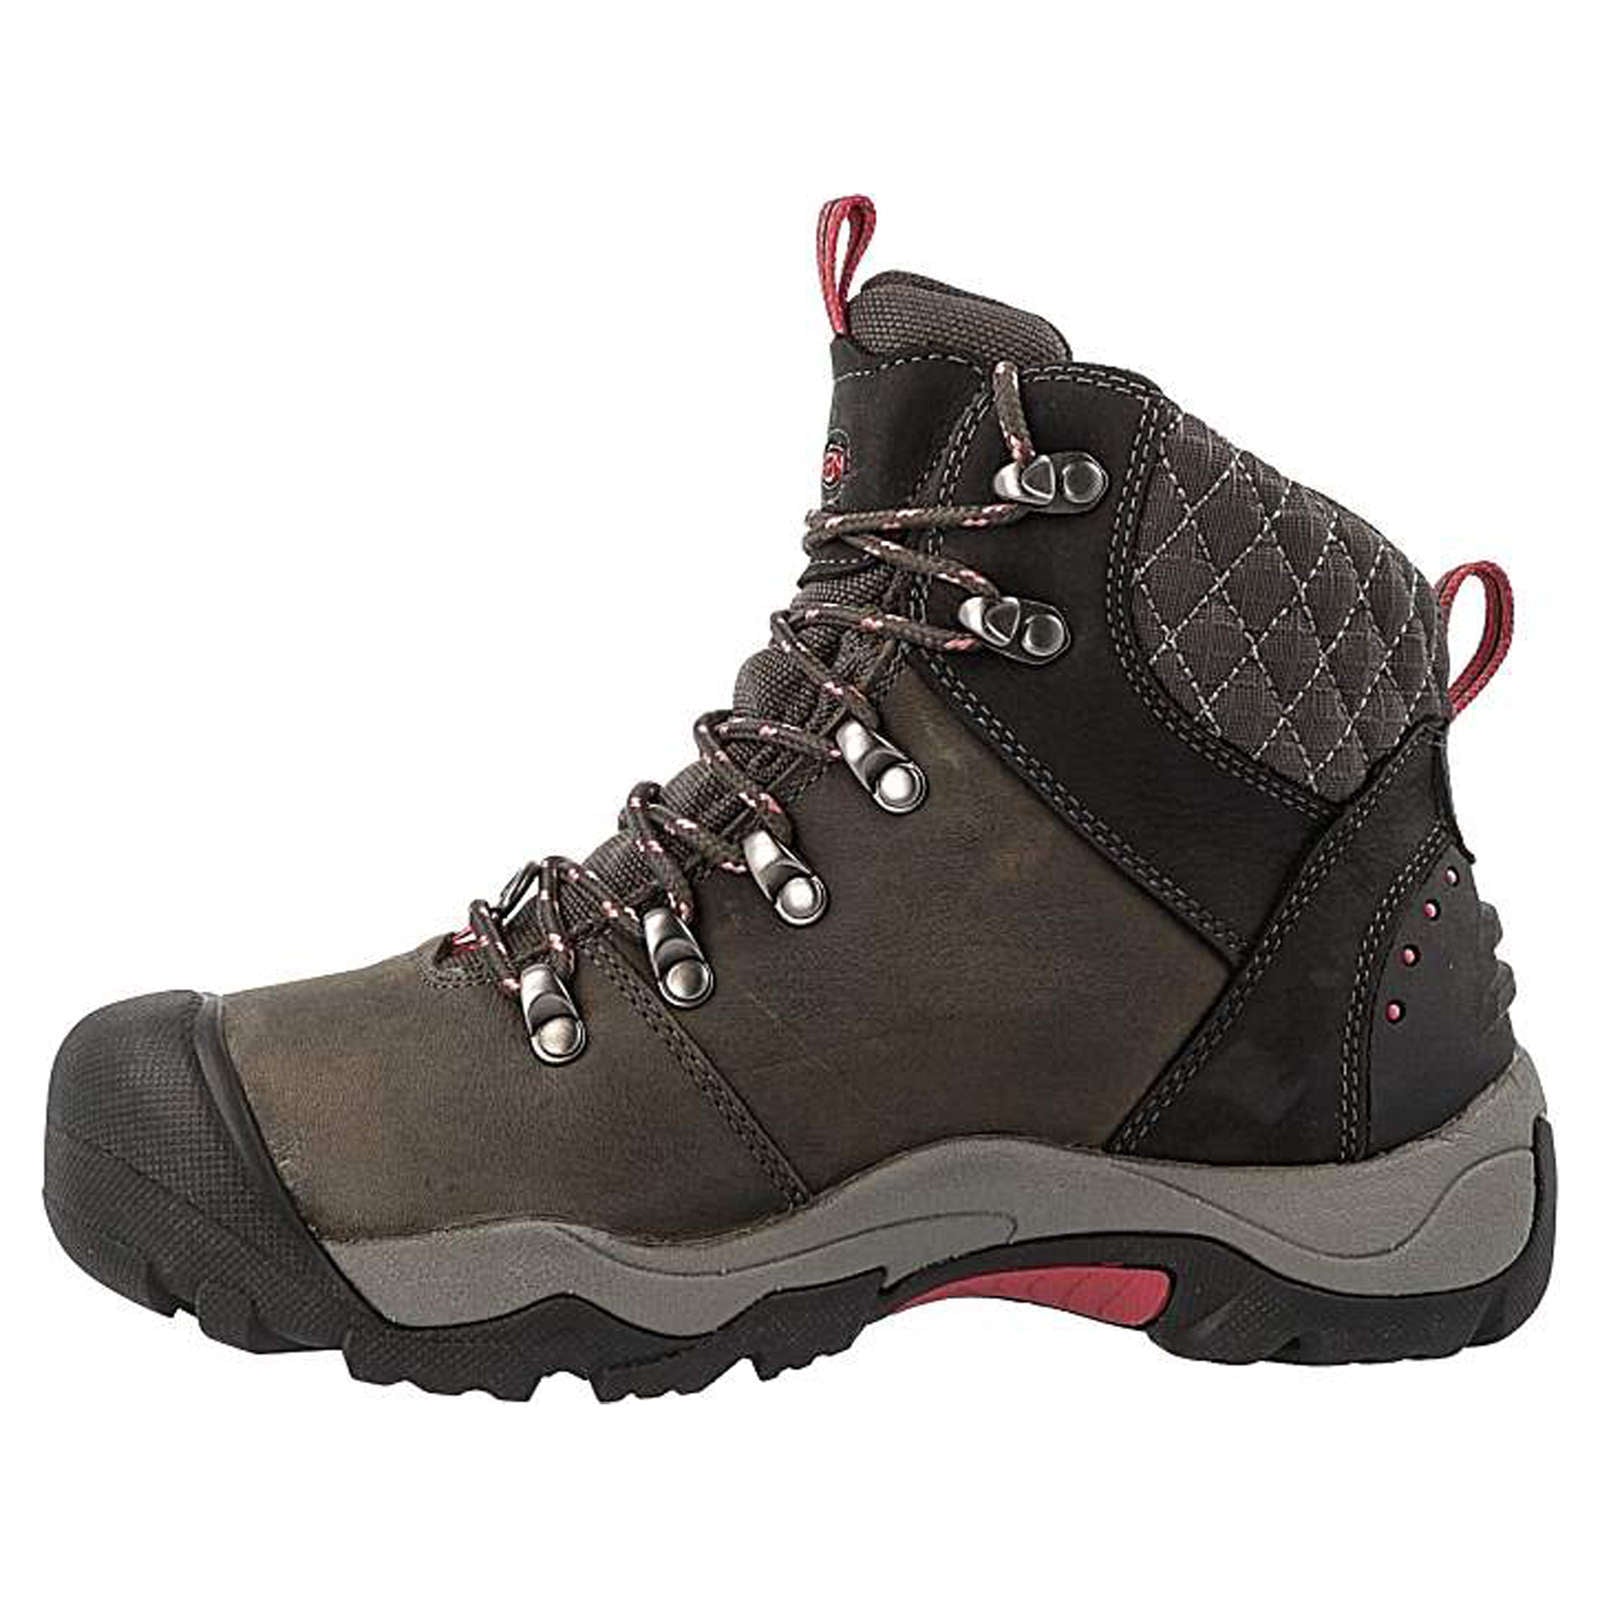 Keen Revel III Waterproof Leather Women's Winter Hiking Boots#color_black rose